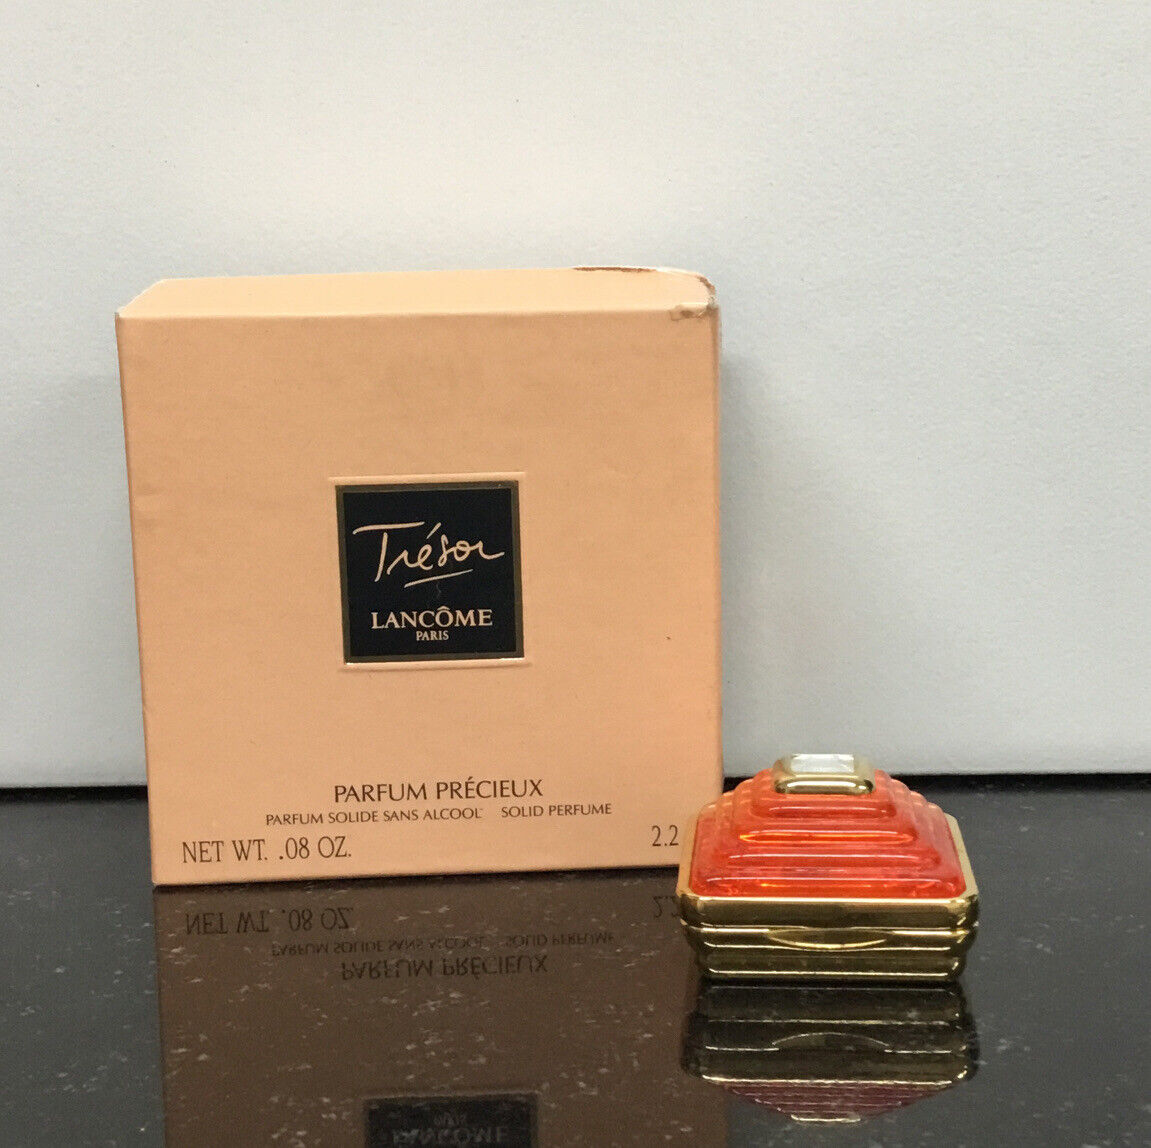 Tresor Lancome Paris collectible parfum .08 oz France Solid Perfume Vintage